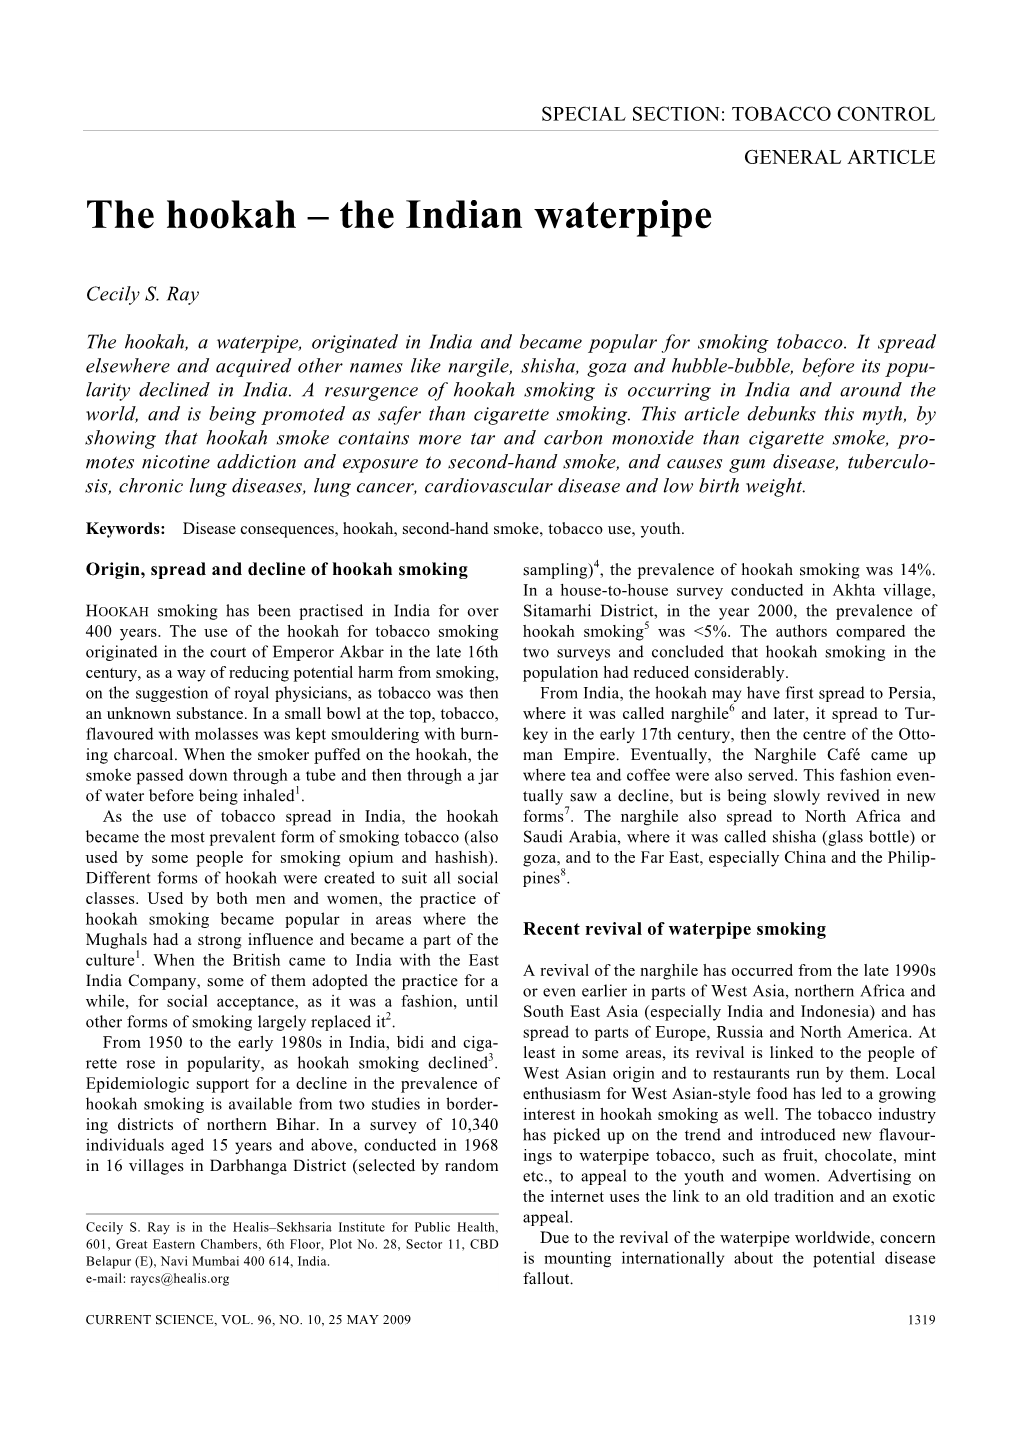 The Hookah – the Indian Waterpipe